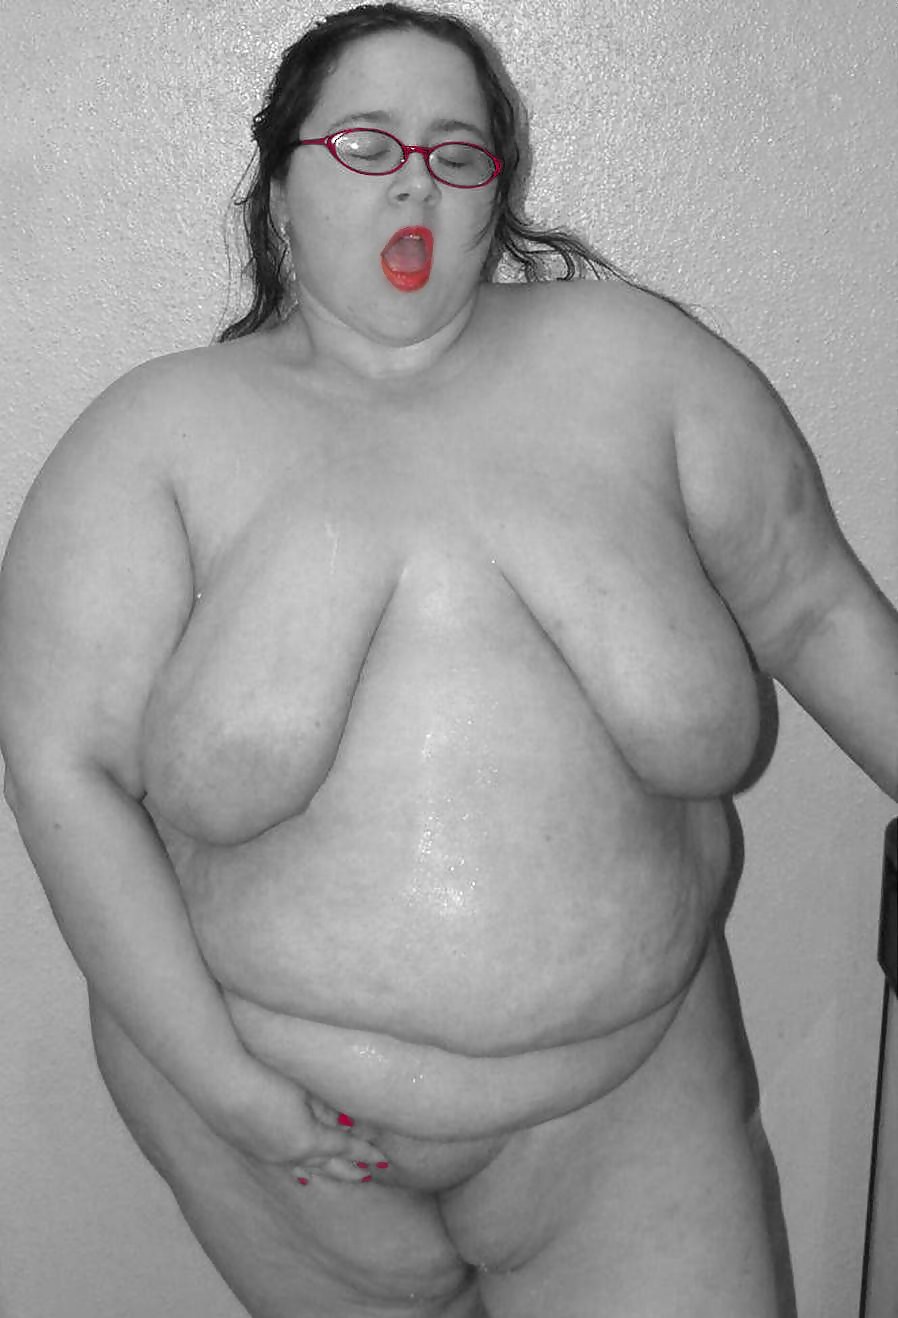 BBW chubby supersize big tits huge ass women adult photos